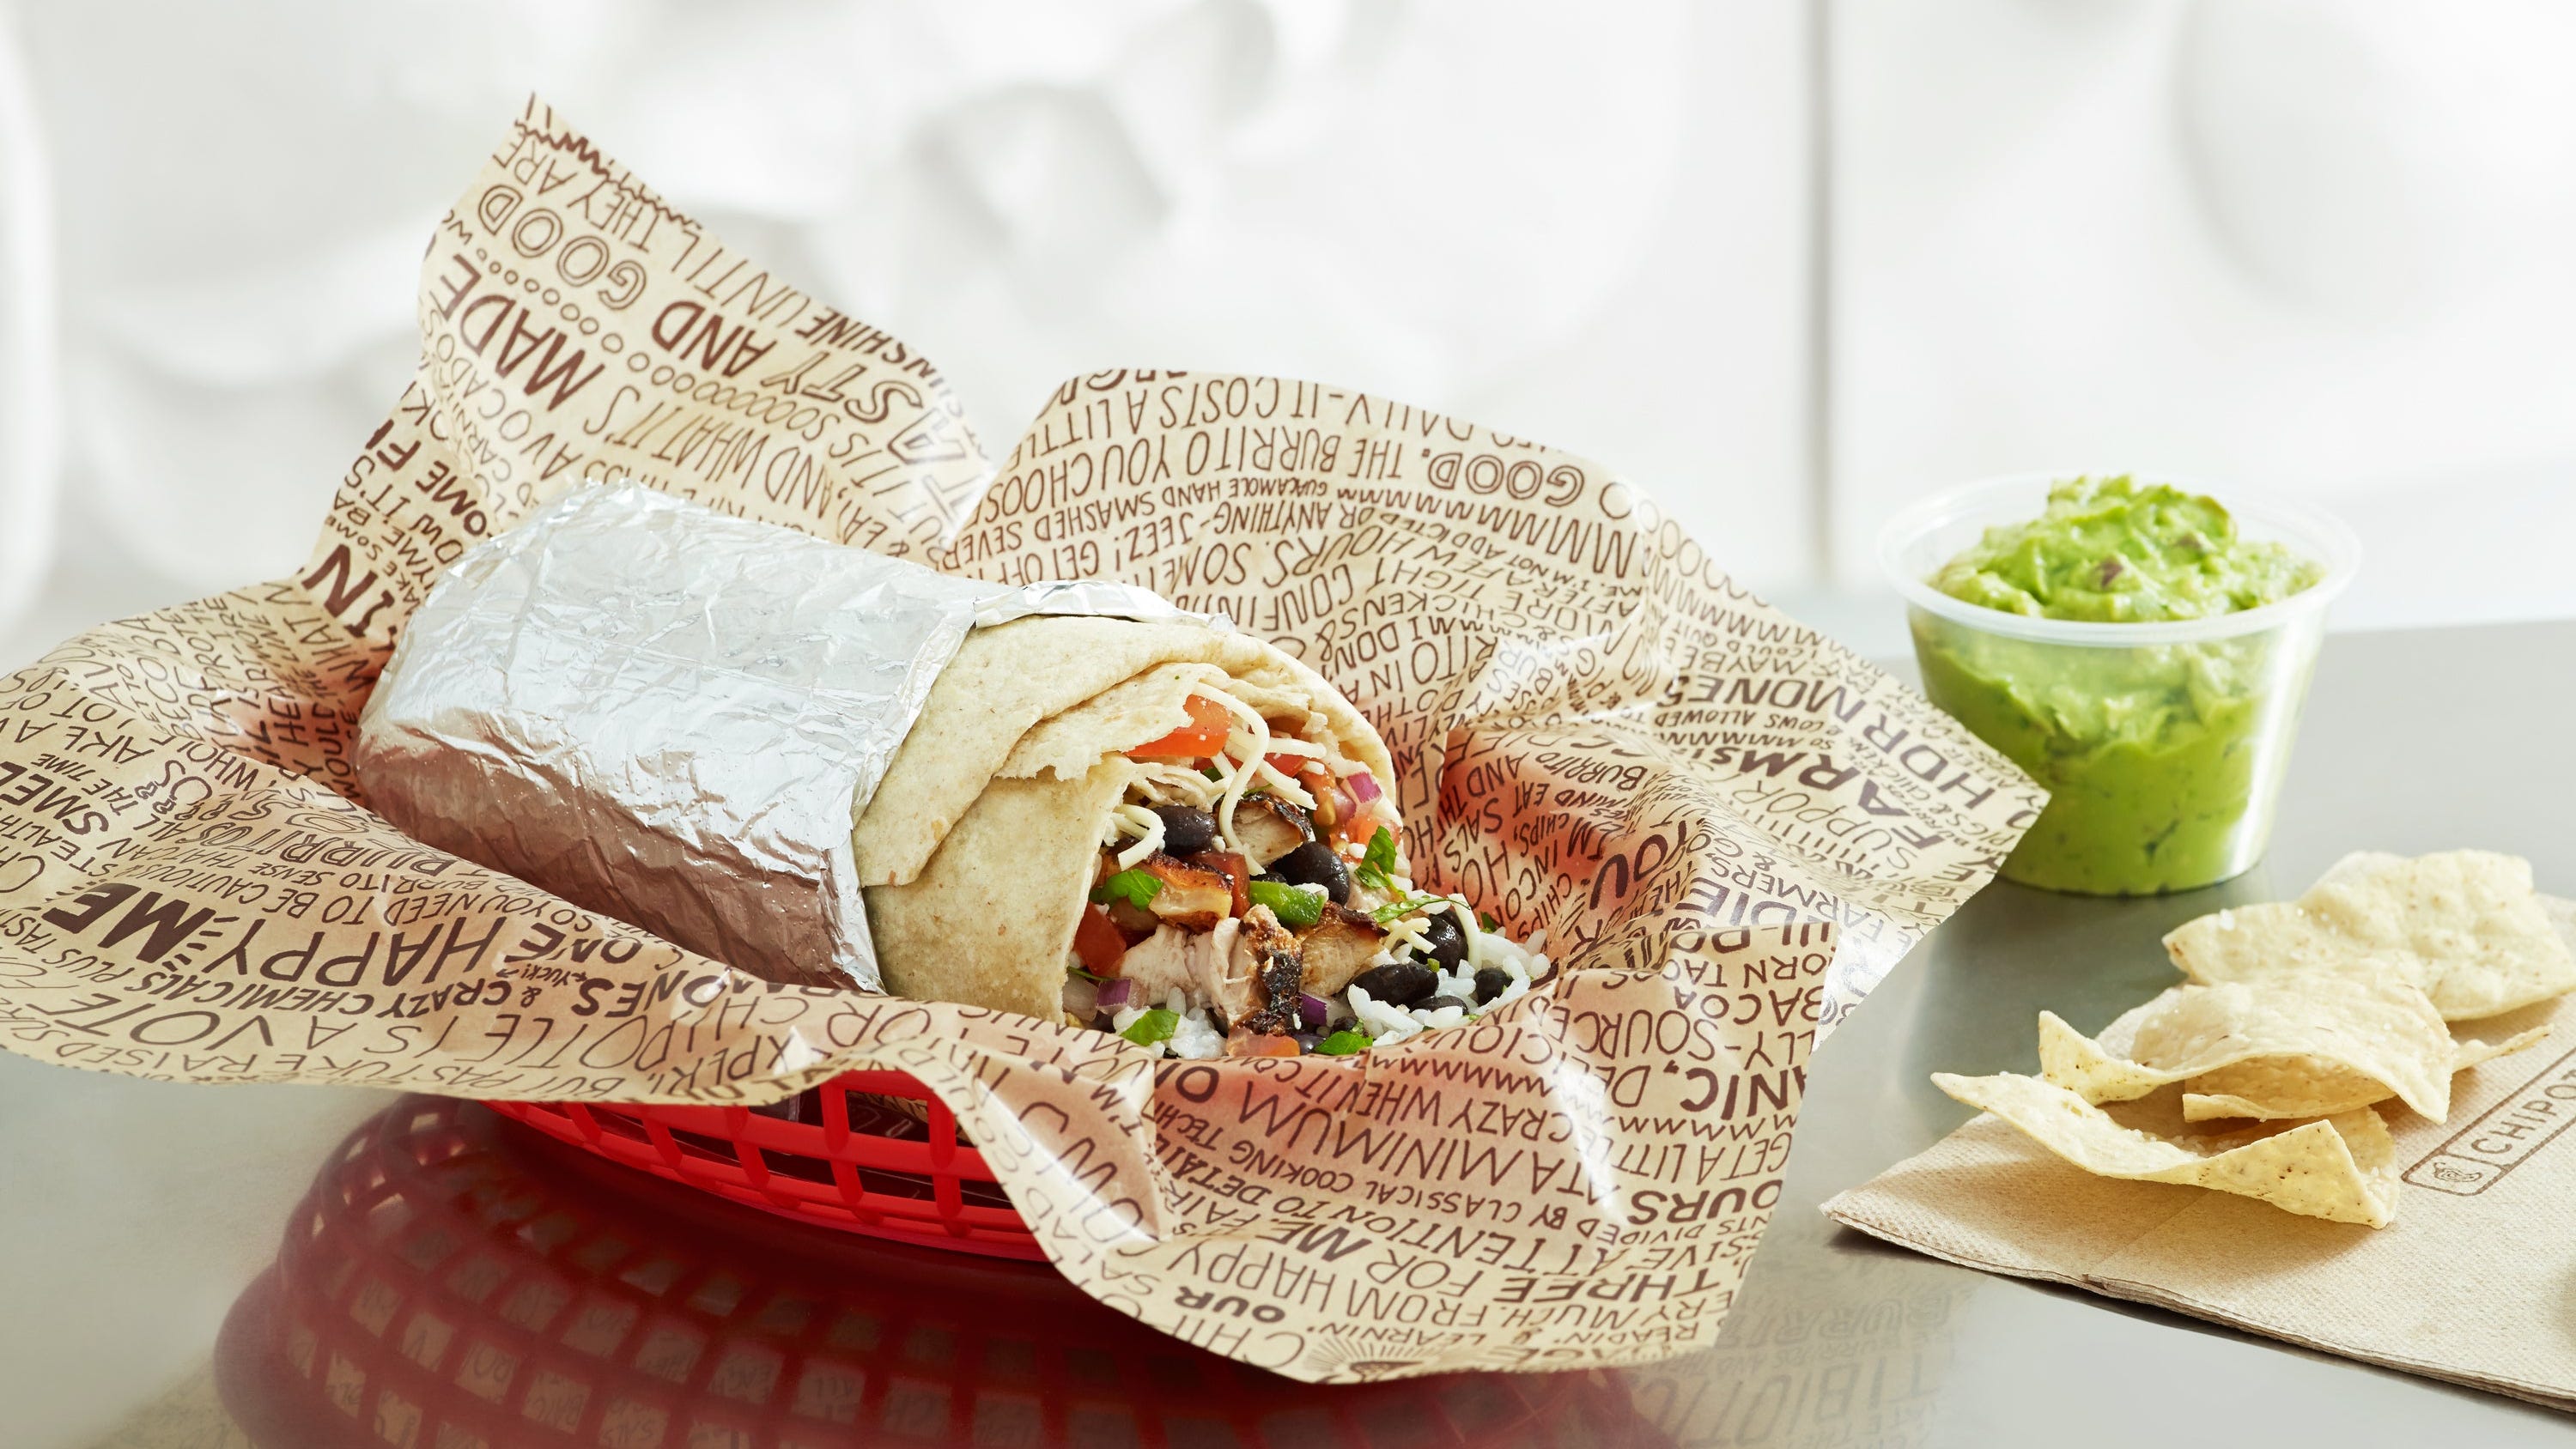 Burrito Day 2022 deals Taco Bell, Chipotle, Del Taco have specials